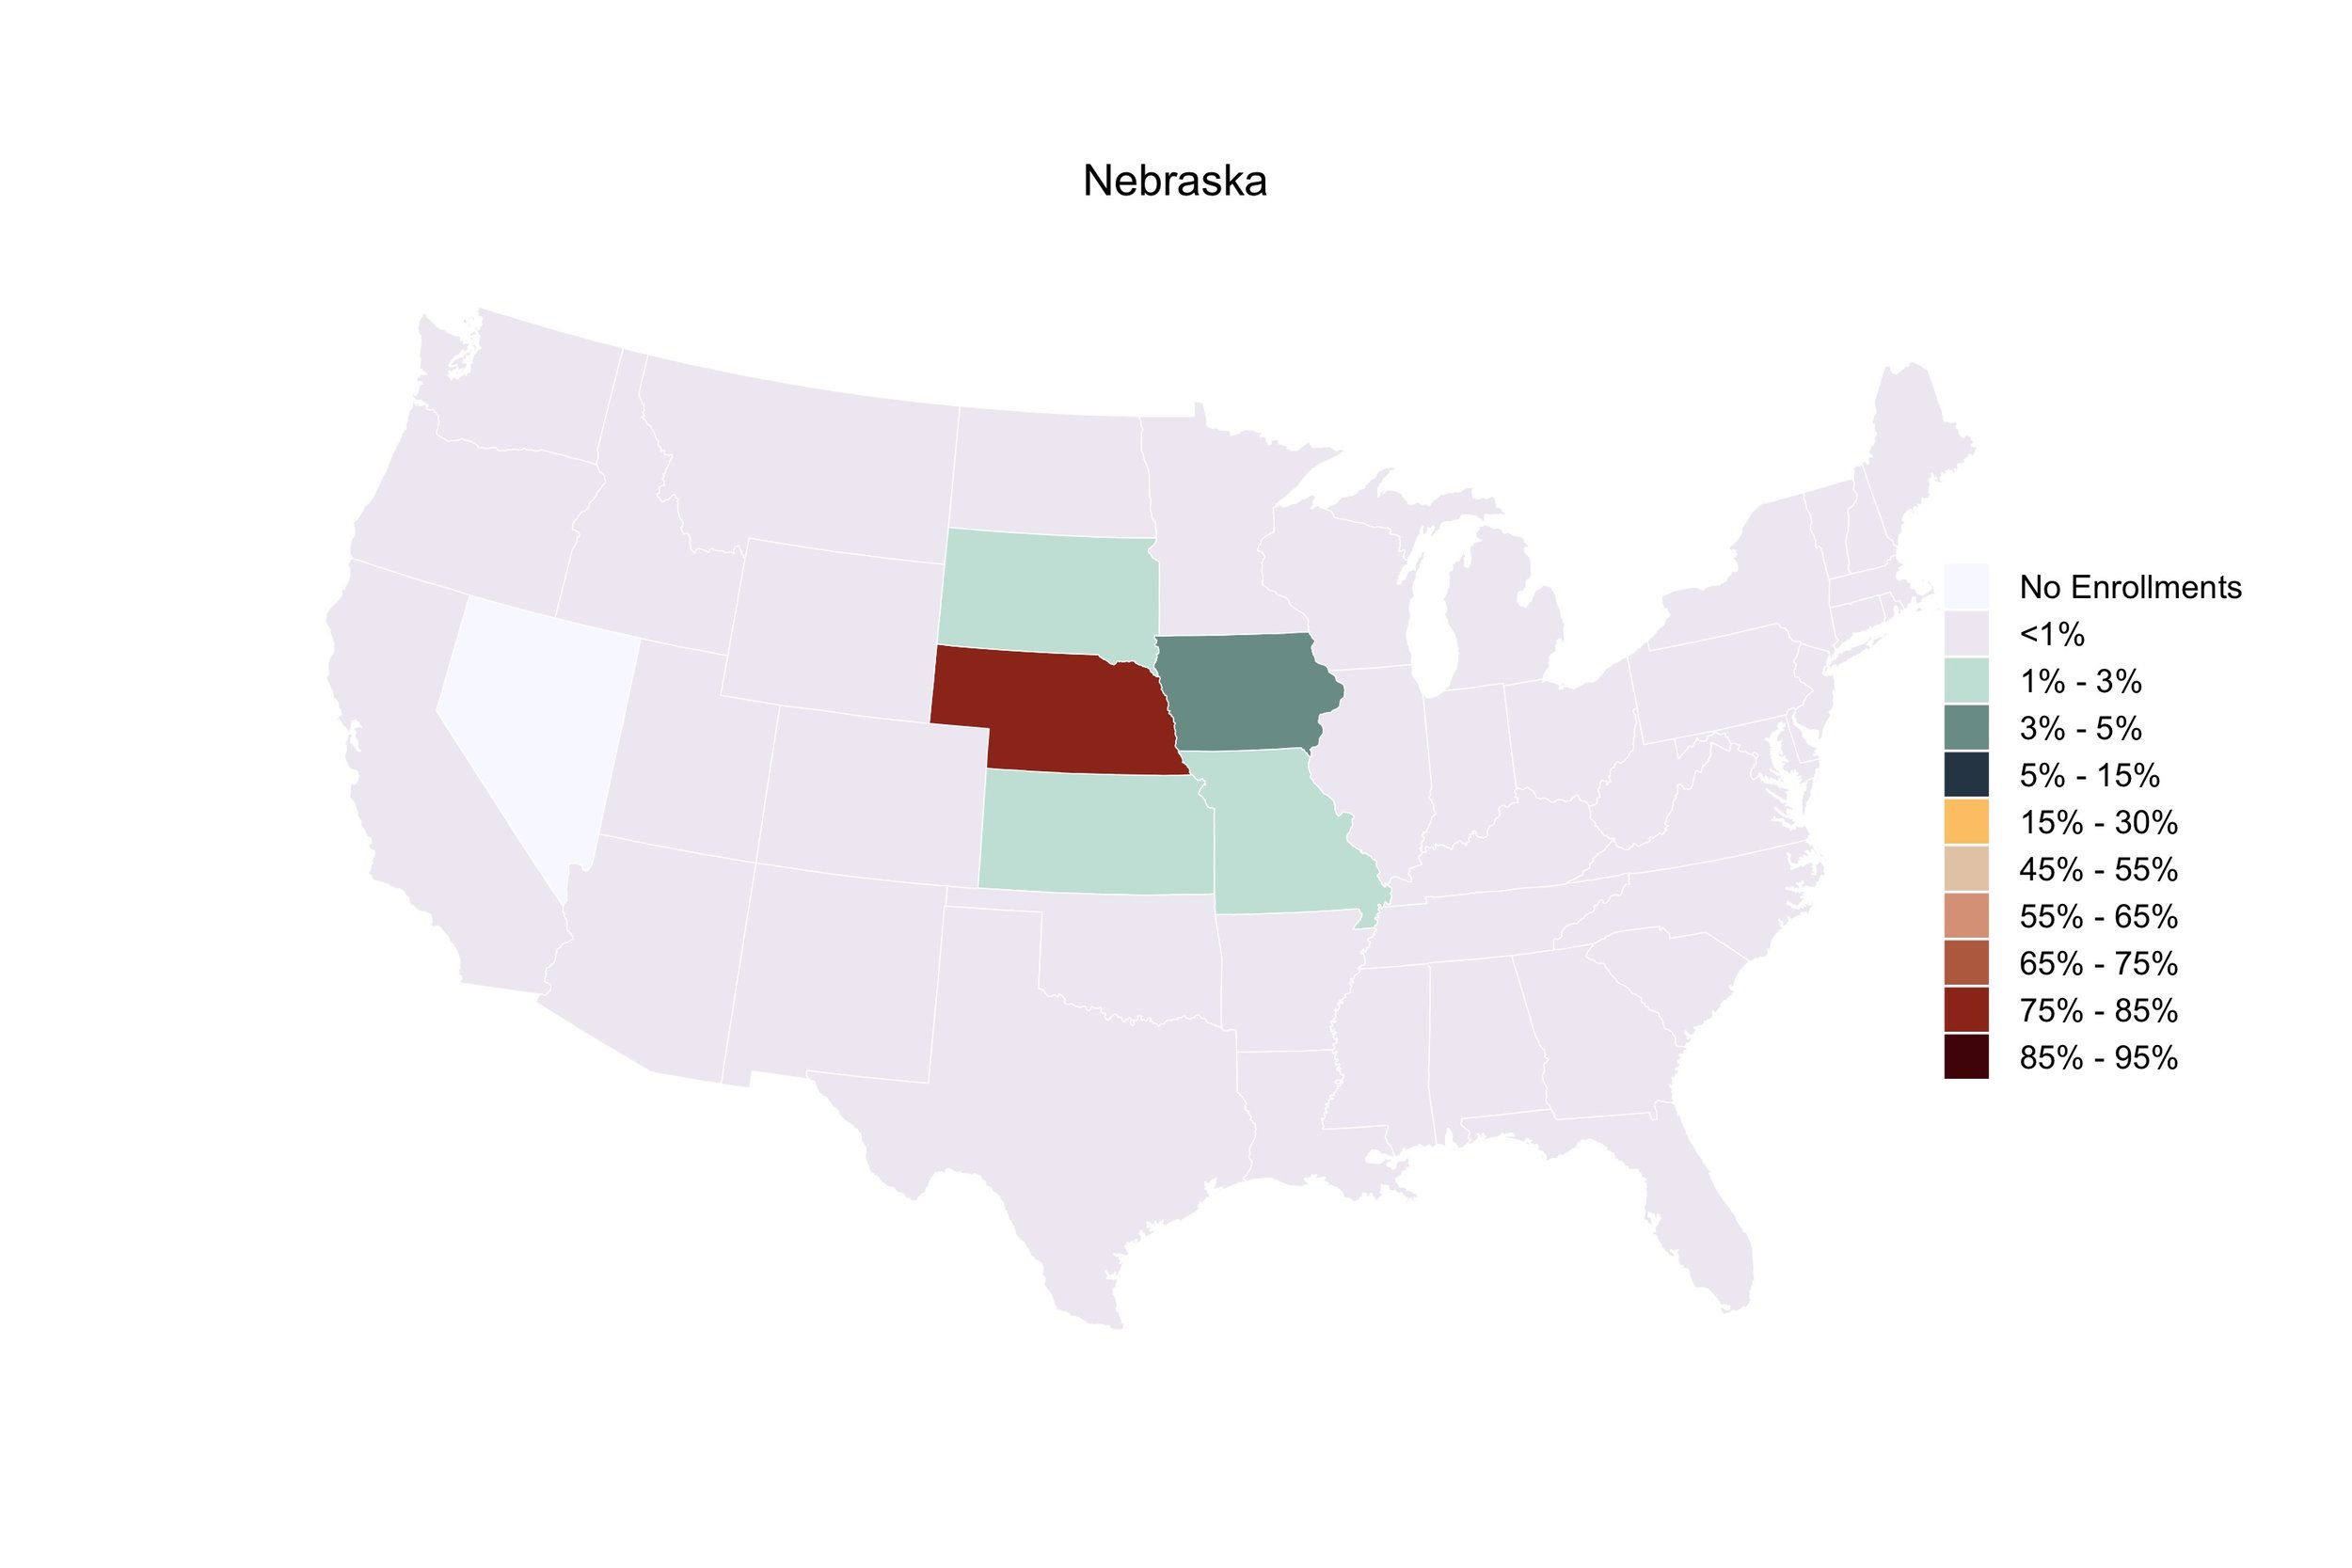 Nebraska.jpg